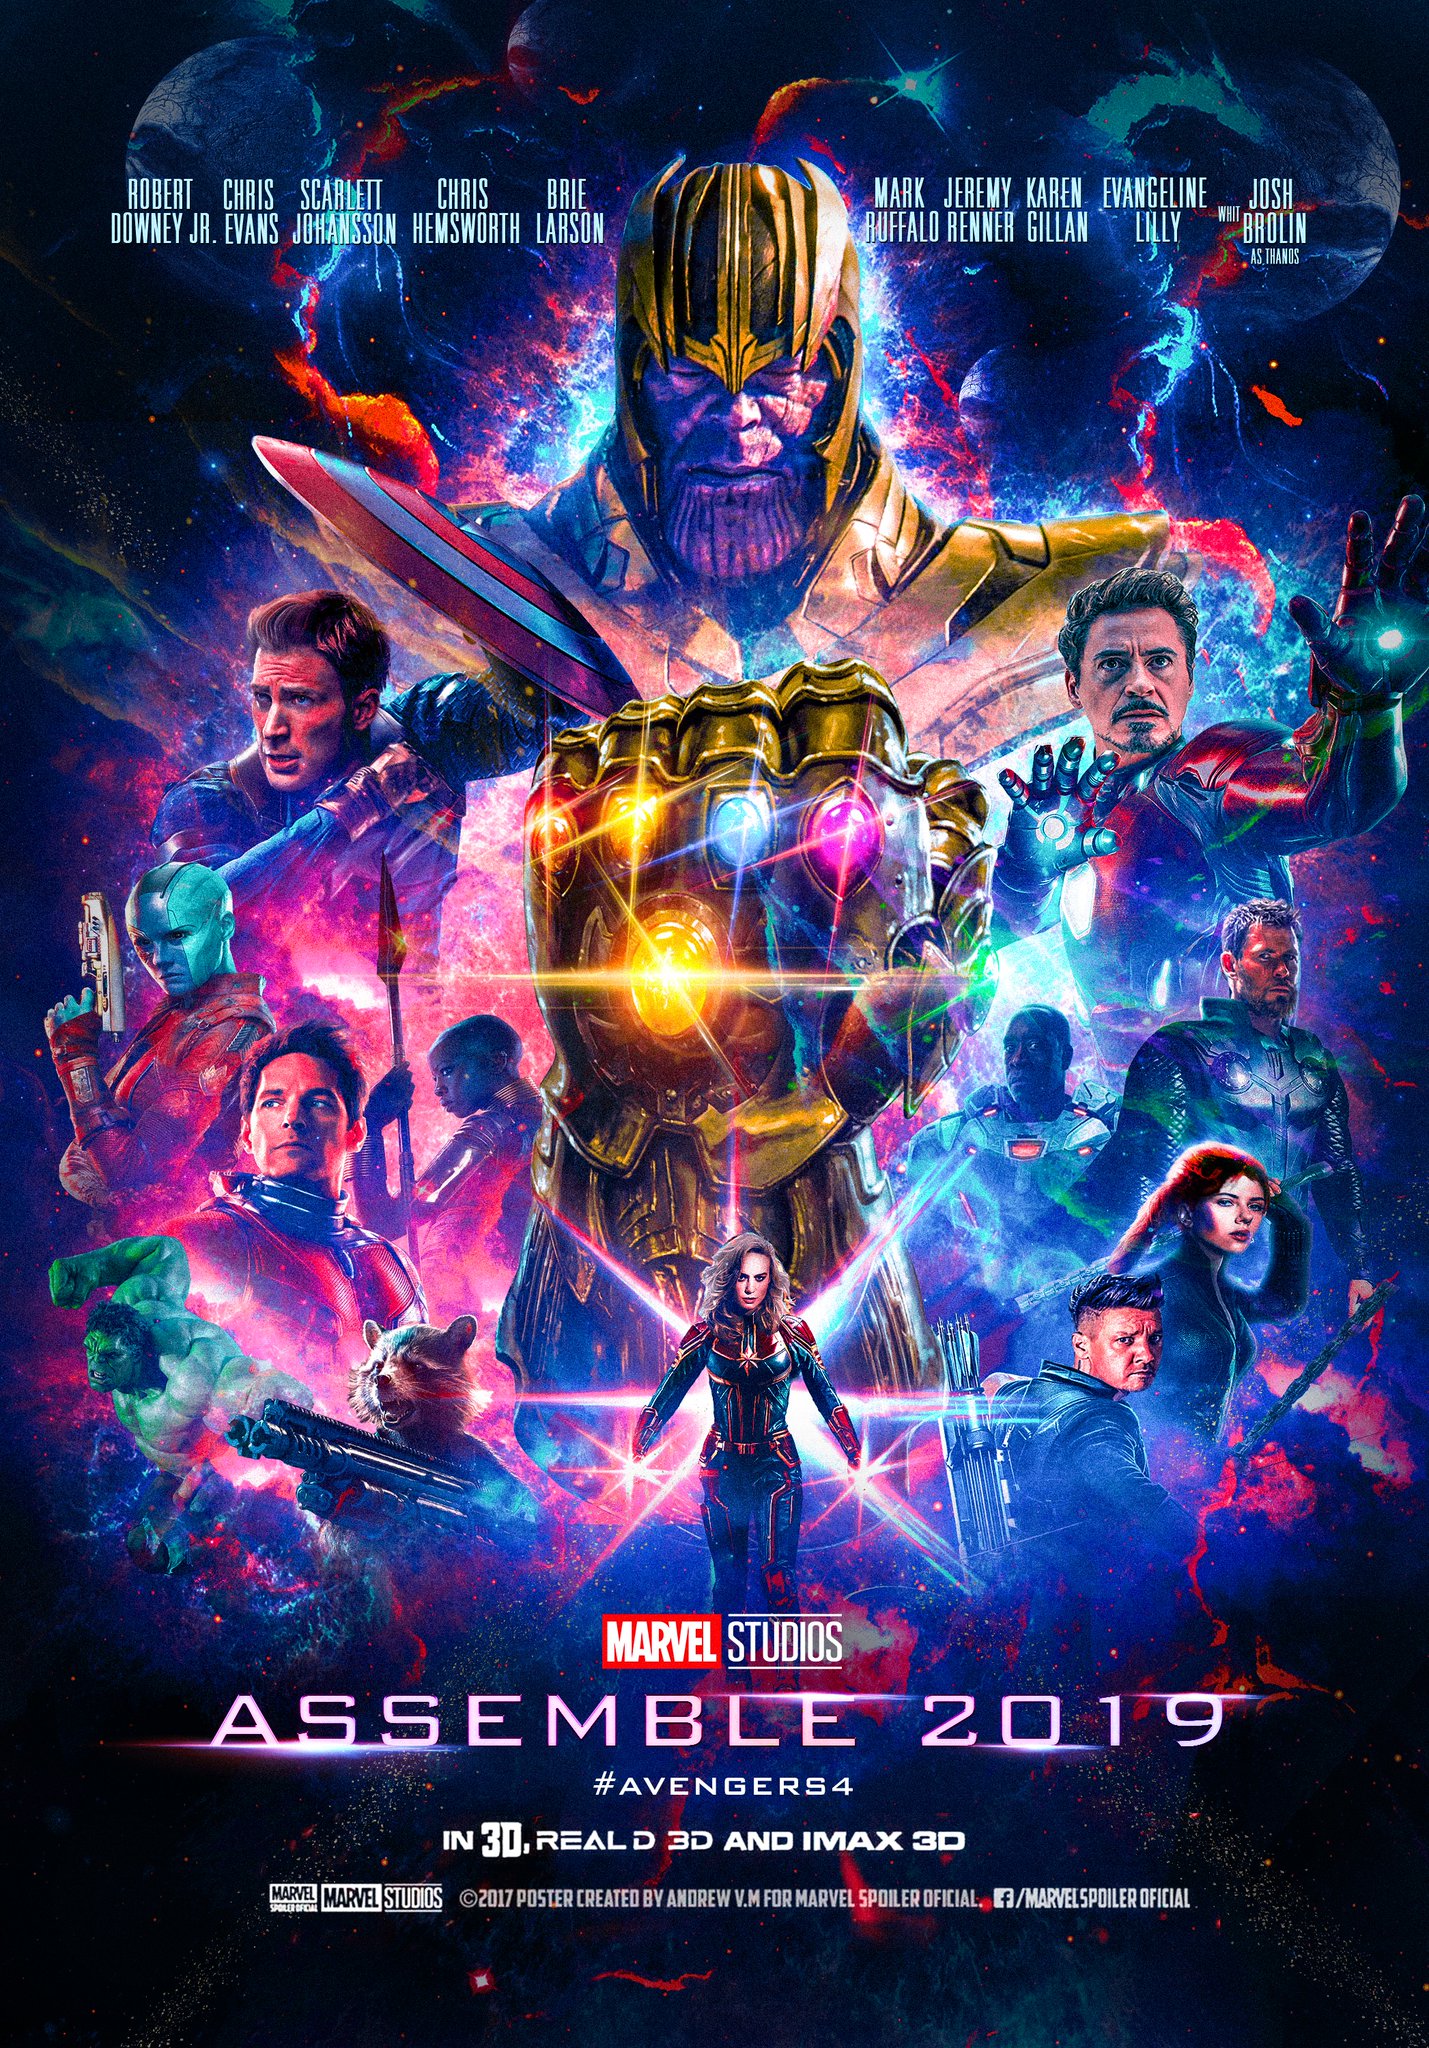 Avengers 4 Fan Posters Tease Endgame  Cosmic Book News